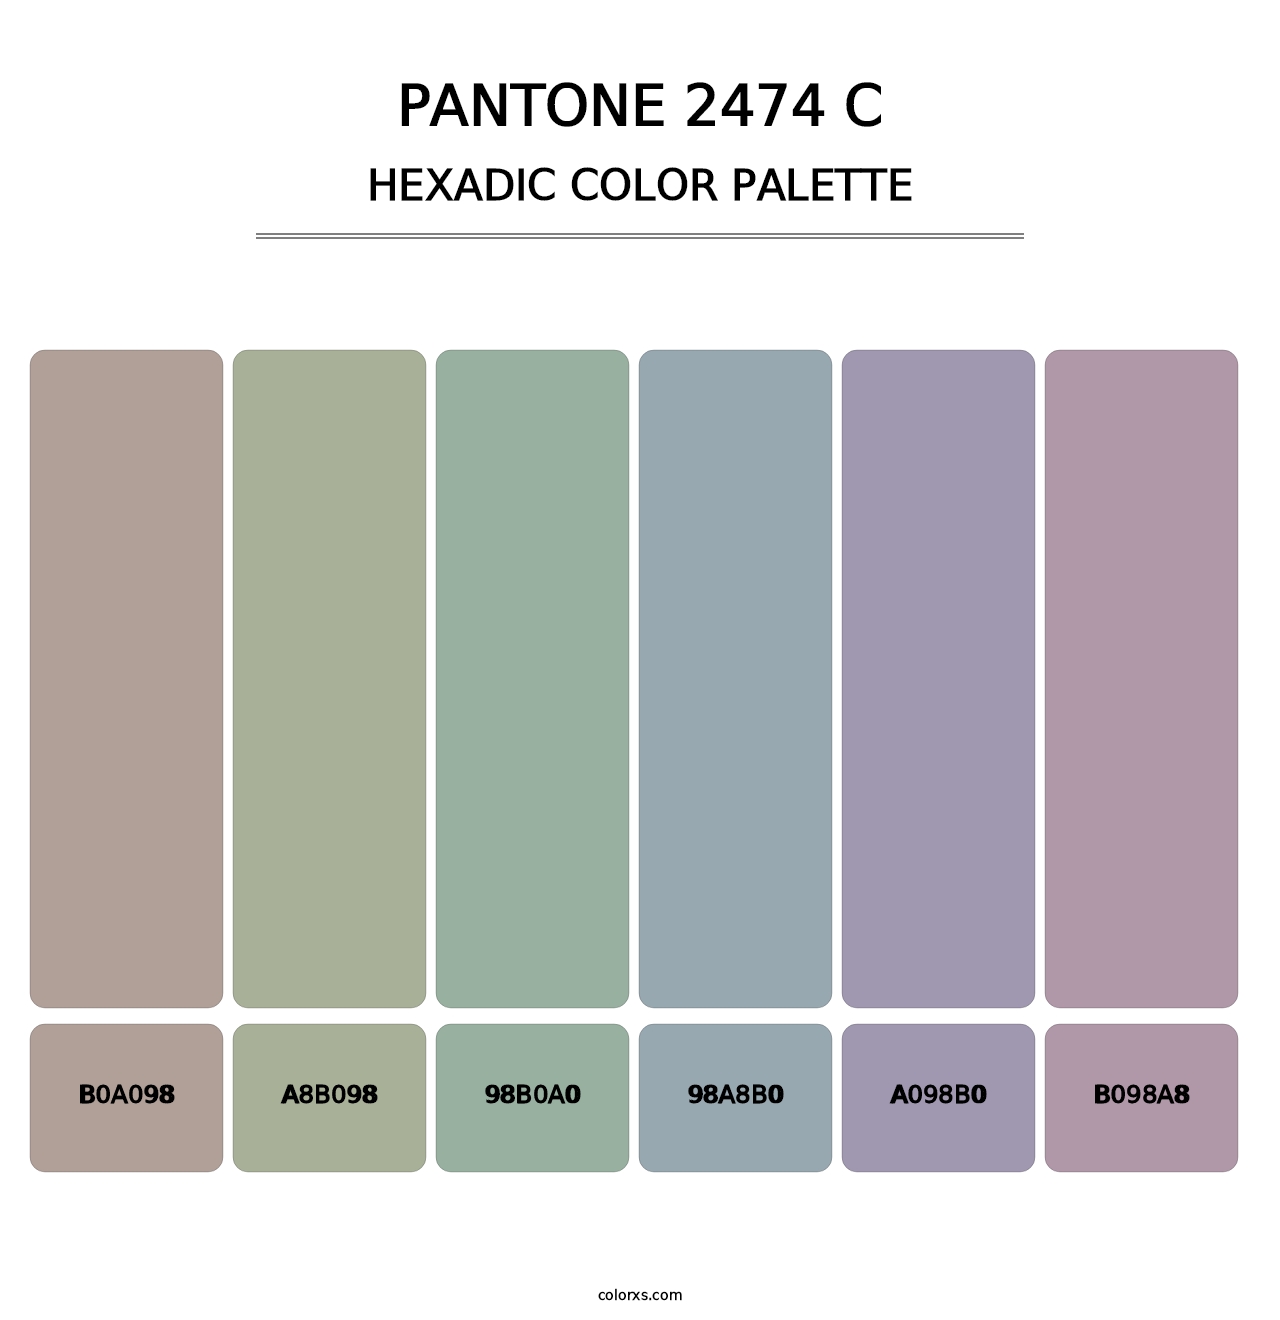 PANTONE 2474 C - Hexadic Color Palette